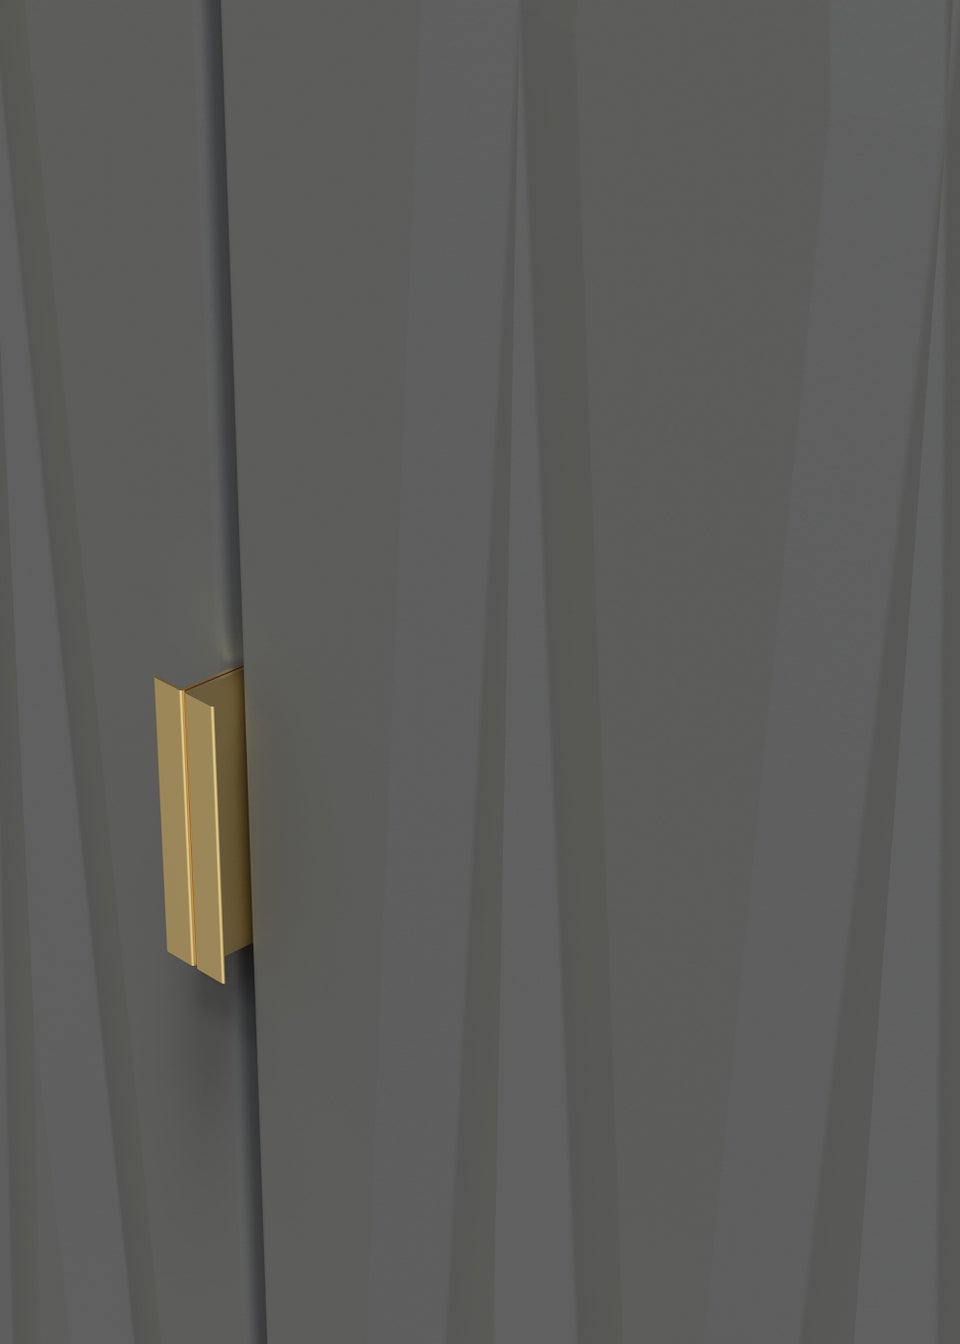 Swift Prism 2 Door 2 Drawer Wardrobe (197cm x 53cm x 74cm)